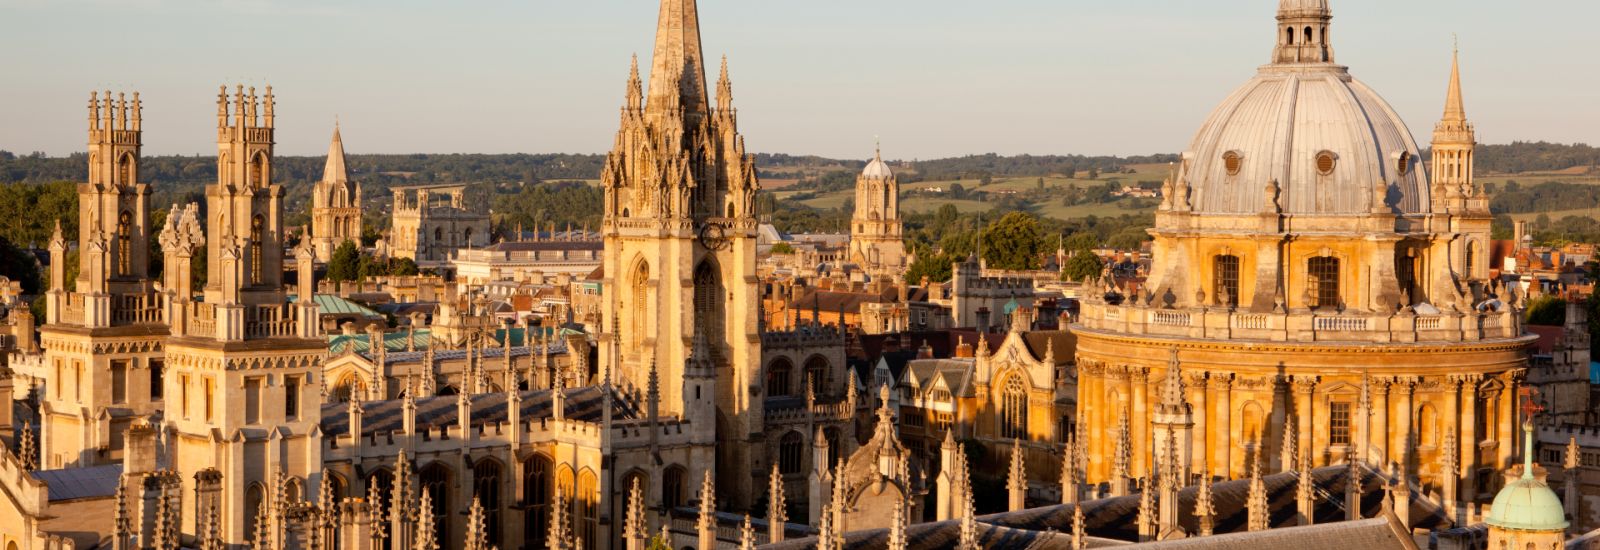 Oxford skyline at sunset.